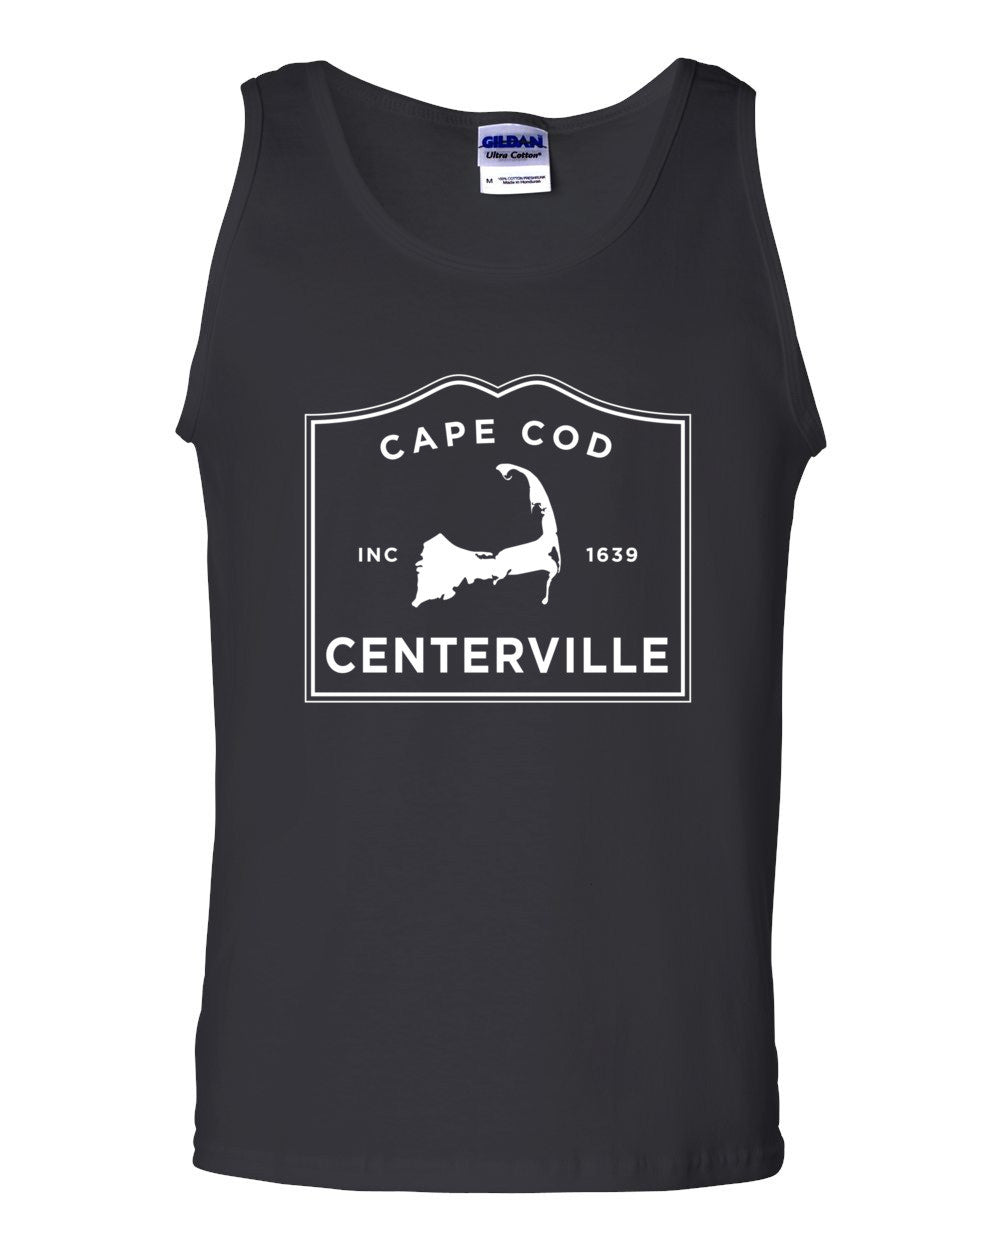 Centerville Cape Cod Tank Top